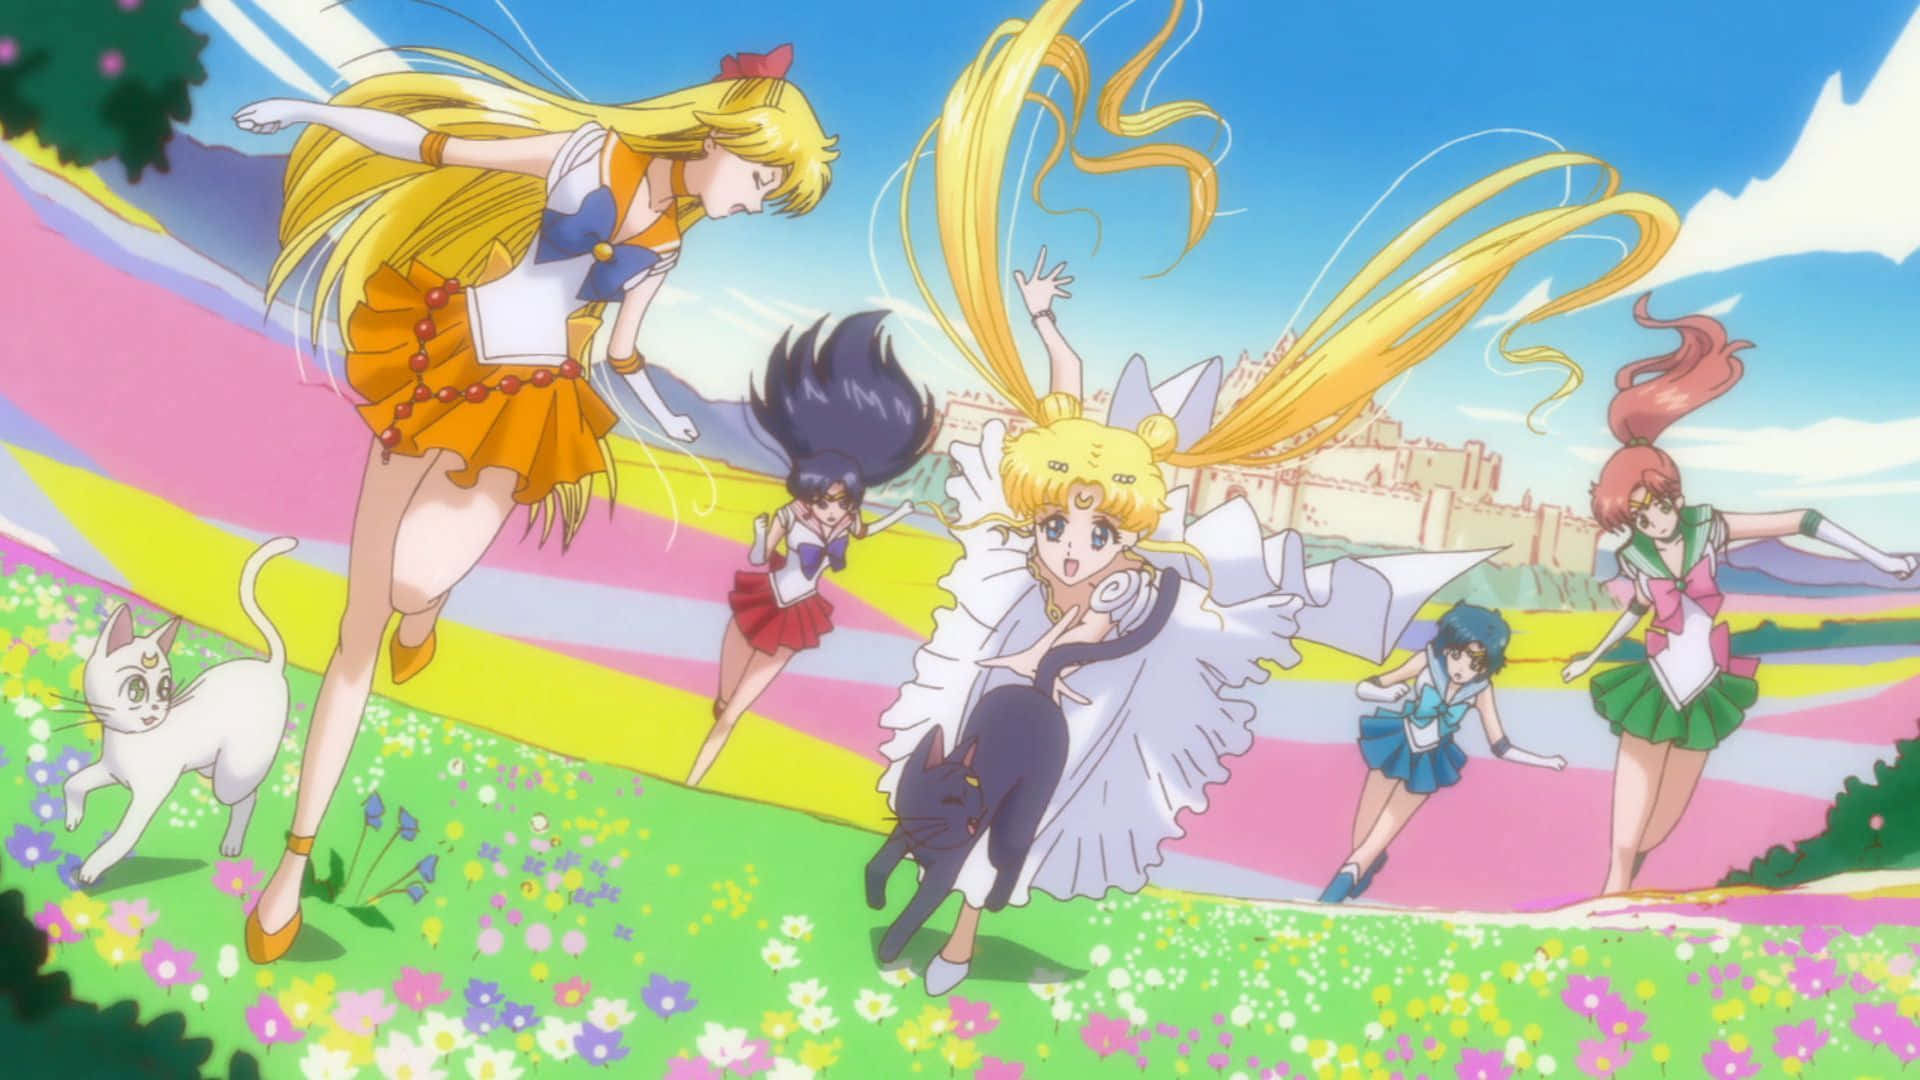 Seeing Is Believing: The Everlasting Adventure of Sailor Moon